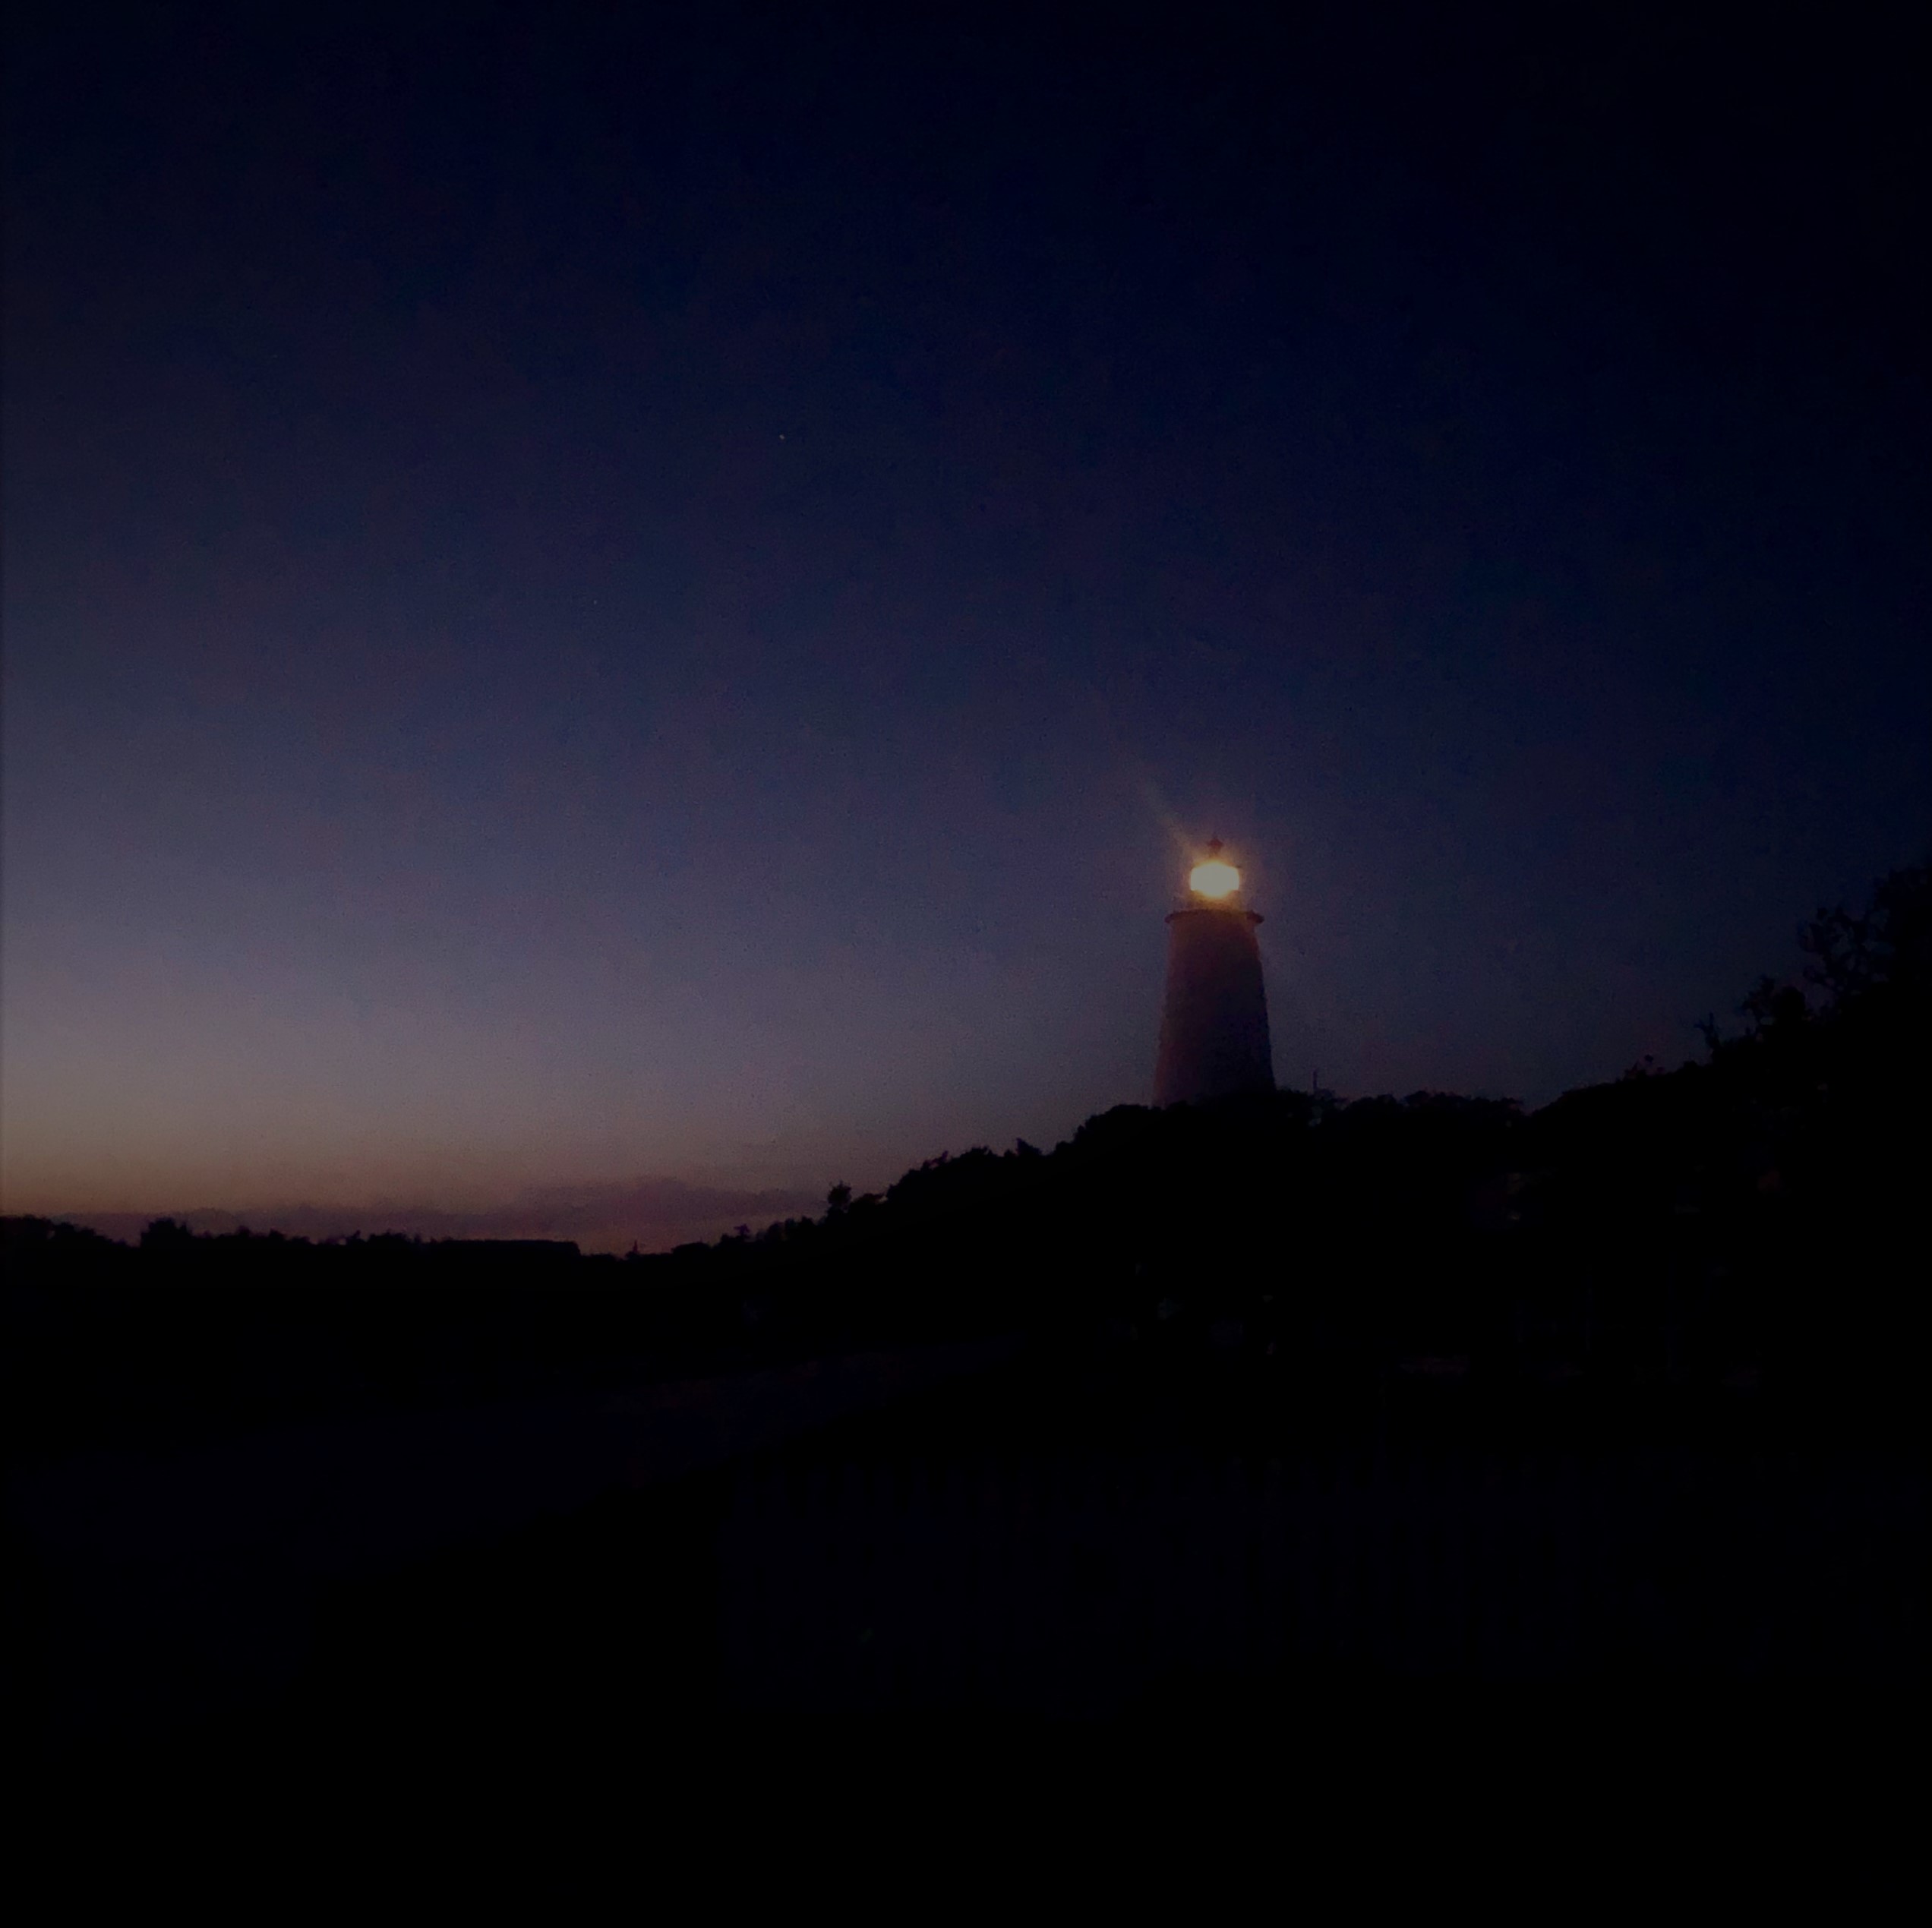 Ocracoke Light shining bright on night it was relit.